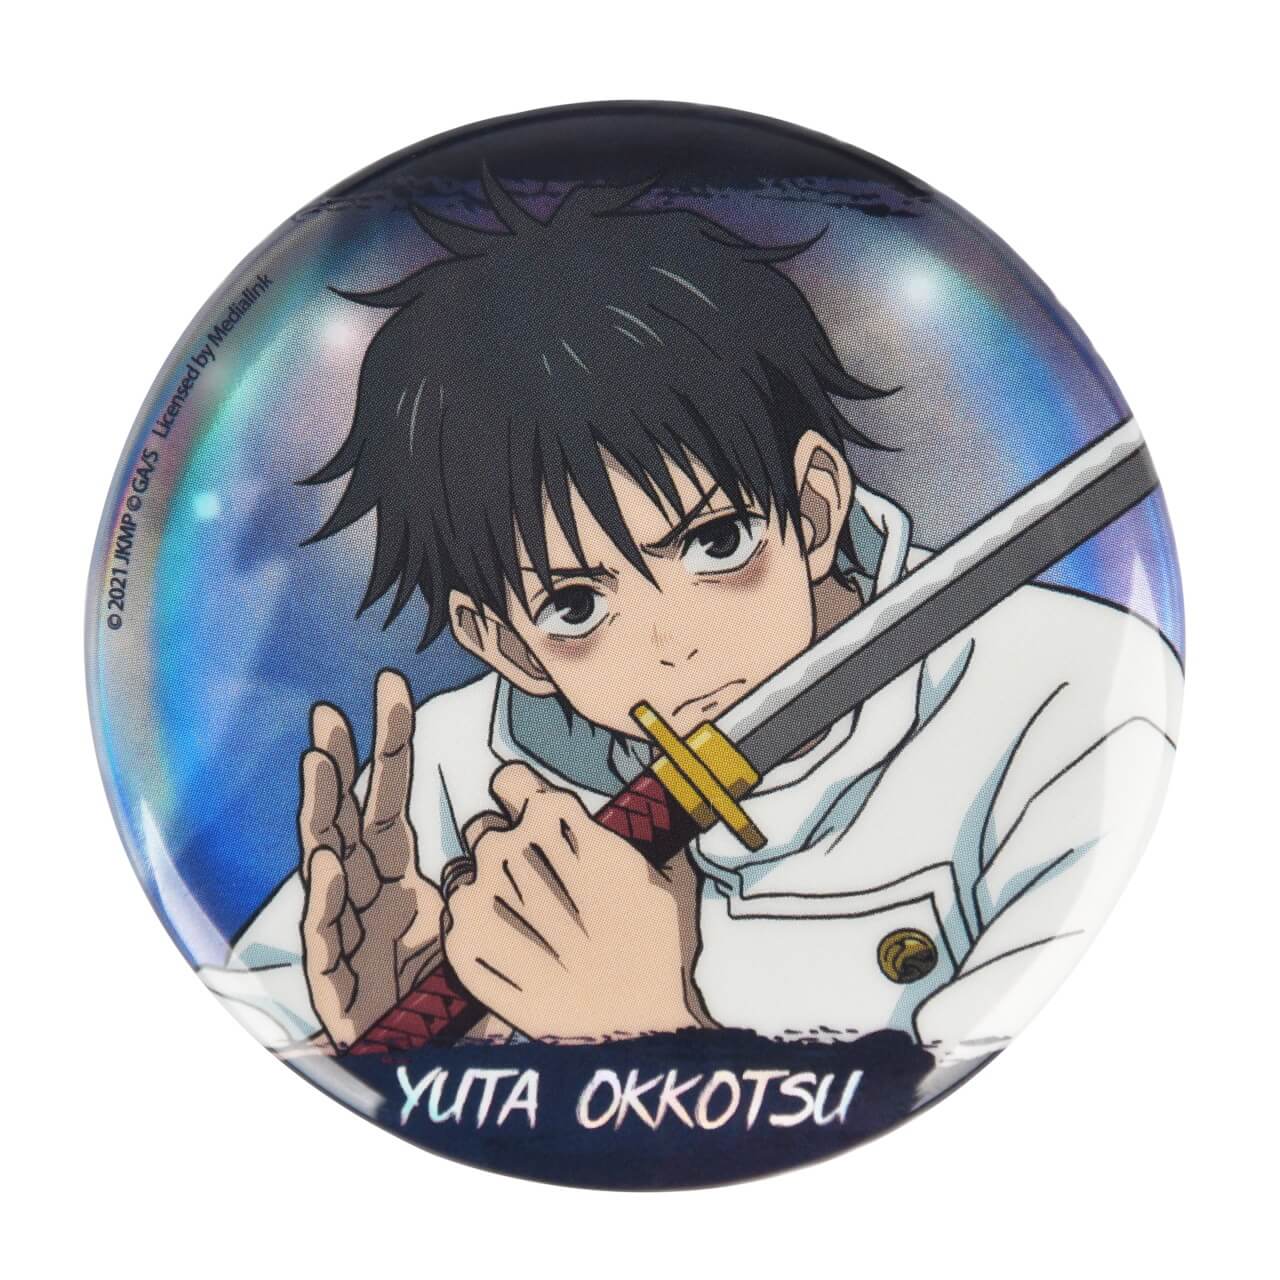 Jujutsu Kaisen 0 Characters Button Anime Pins - FIHEROE.